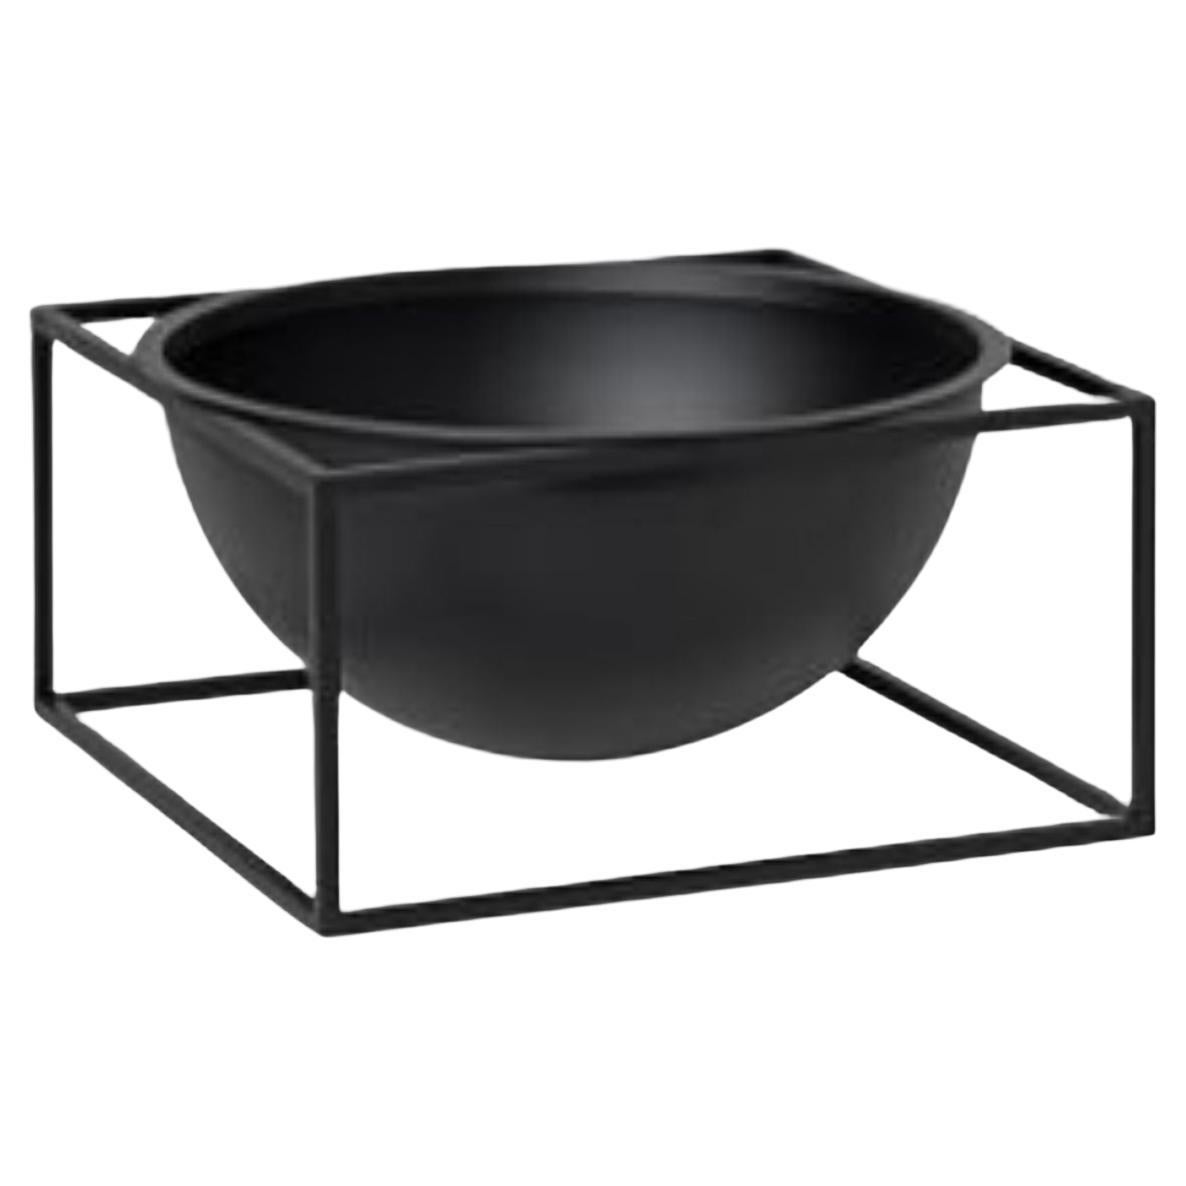 Black Large Centerpiece Kubus Bowl by Lassen